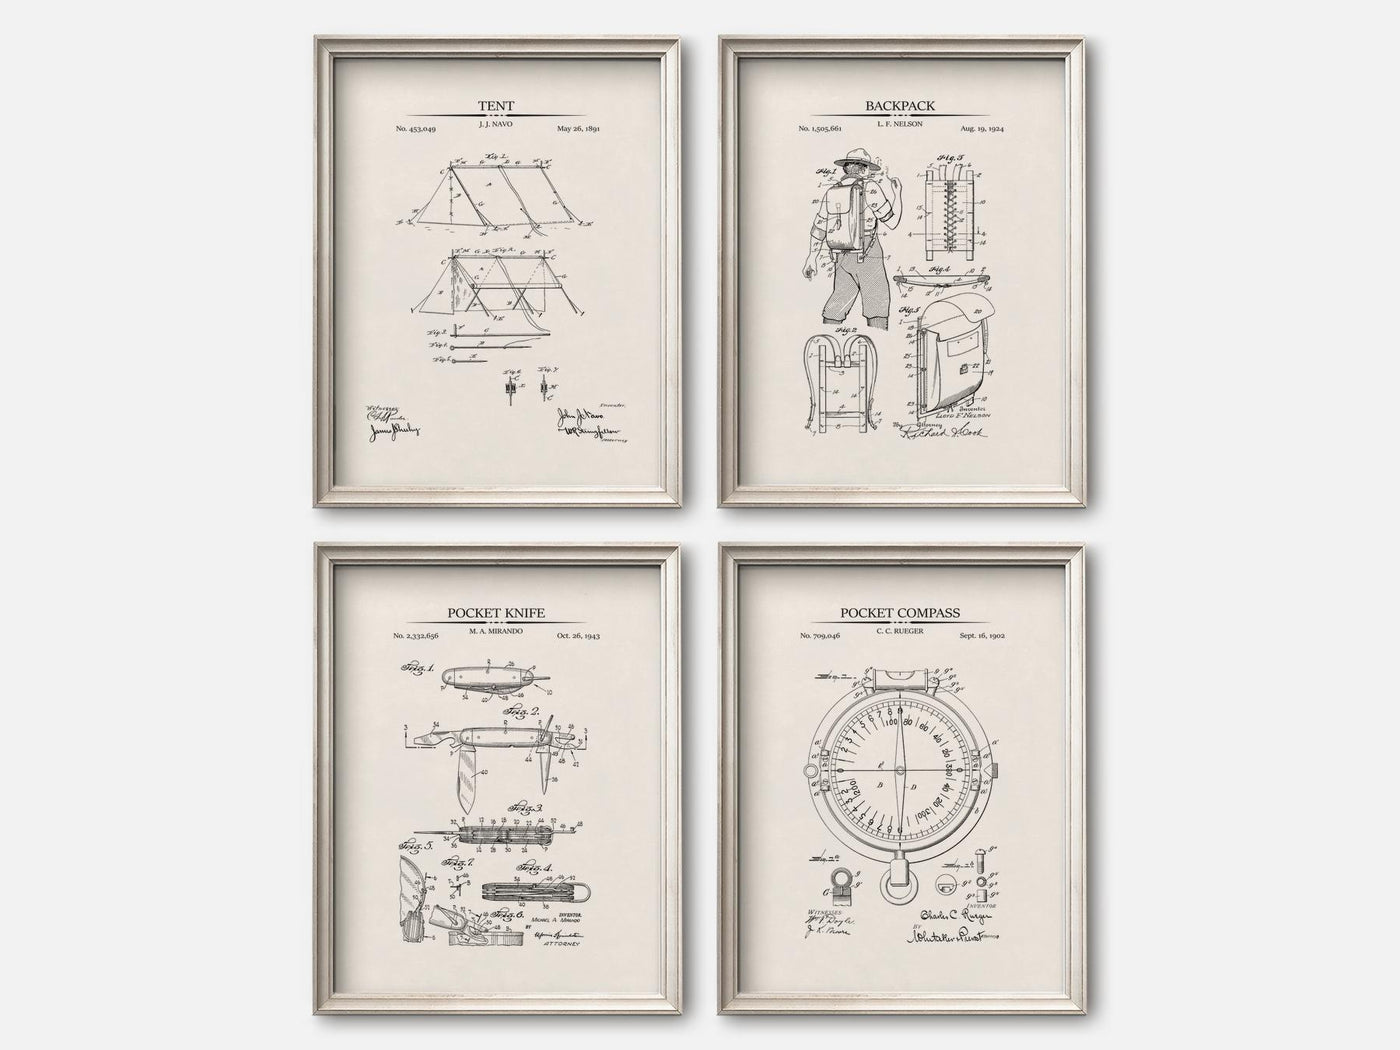 Camping Patent Print Set of 3 mockup - A_t10017-V1-PC_F+O-SS_4-PS_5x7-C_ivo variant